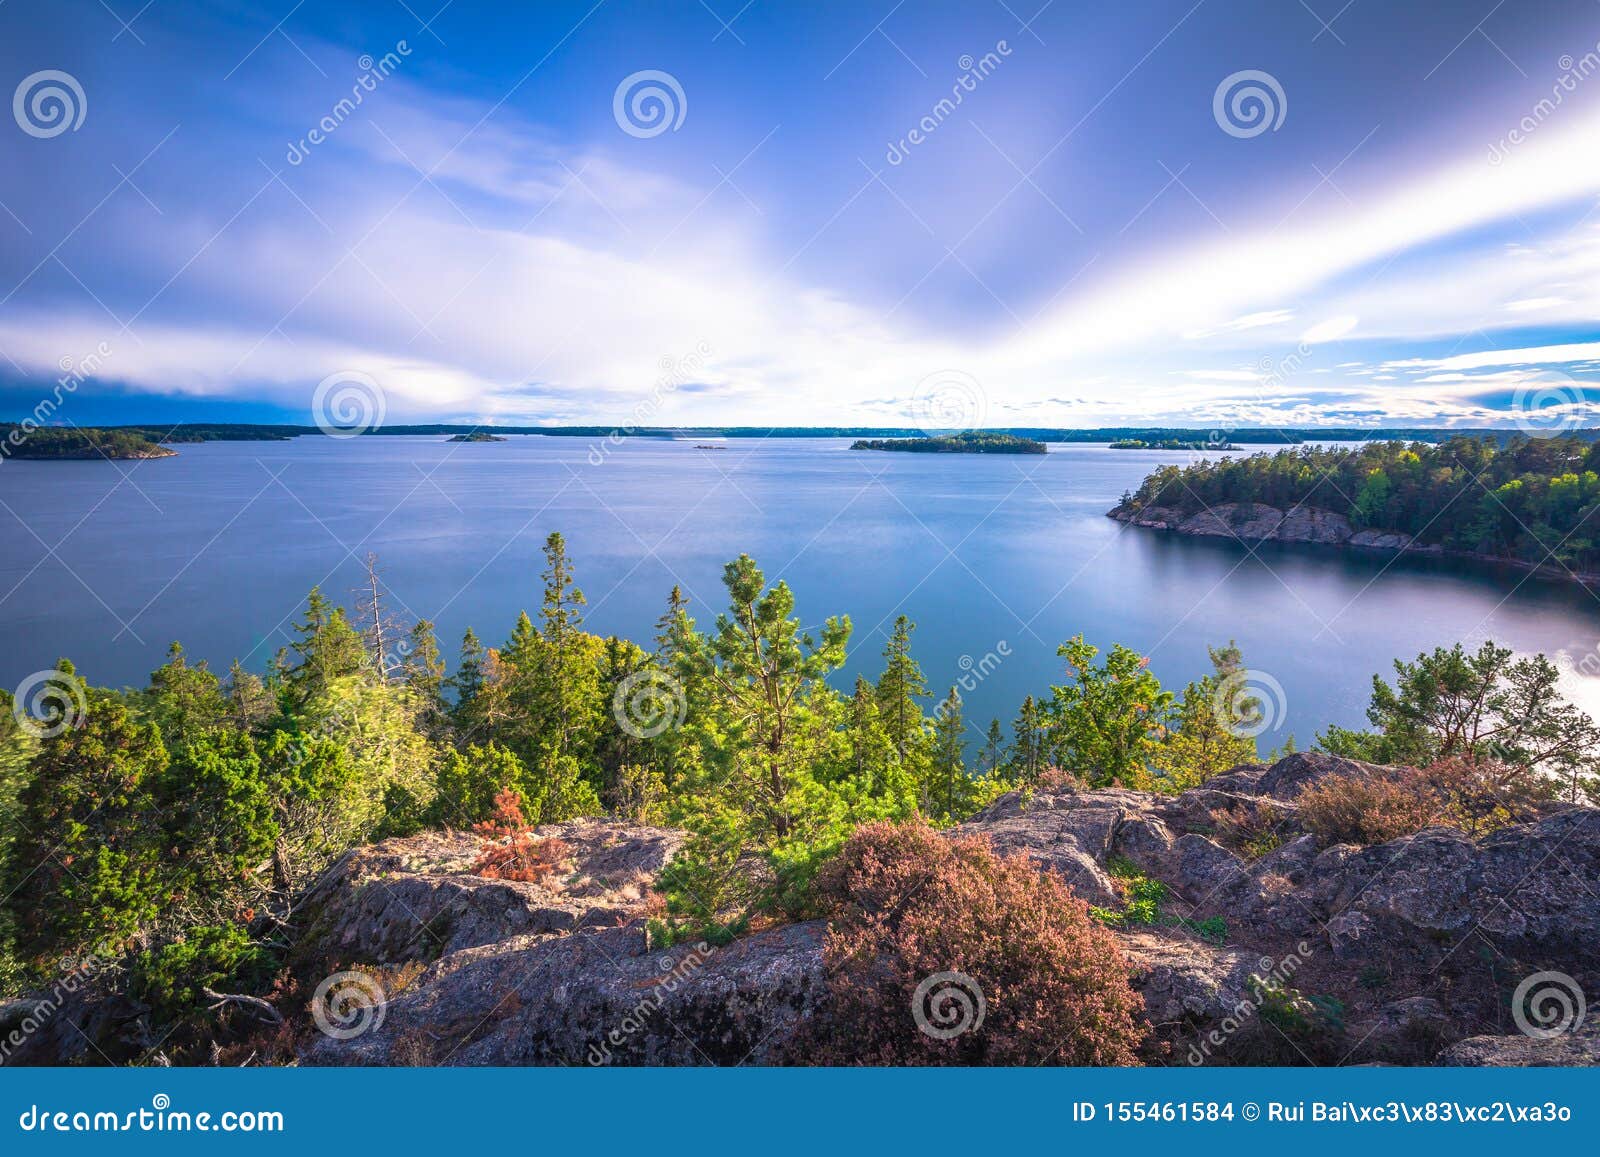 wild landscape of the swedish archipelago, sweden